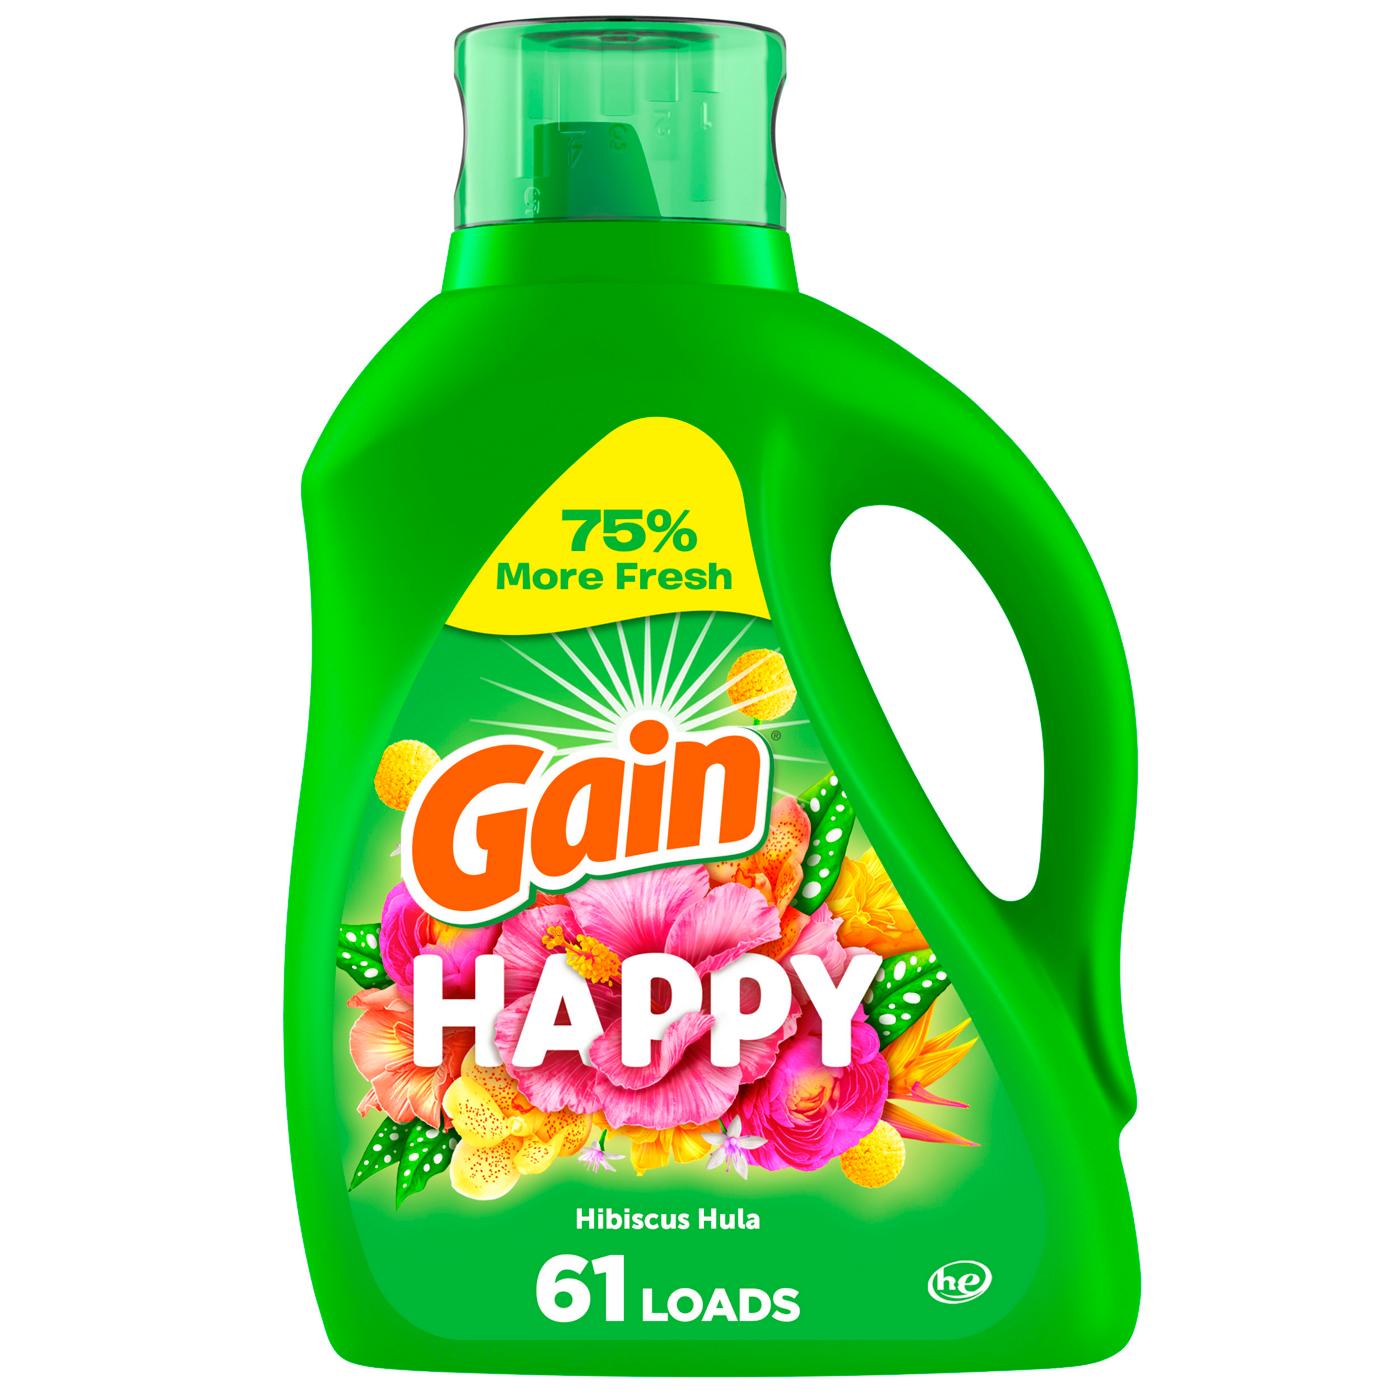 Gain Happy HE Liquid Laundry Detergent, 61 Loads - Hibiscus Hula; image 1 of 3